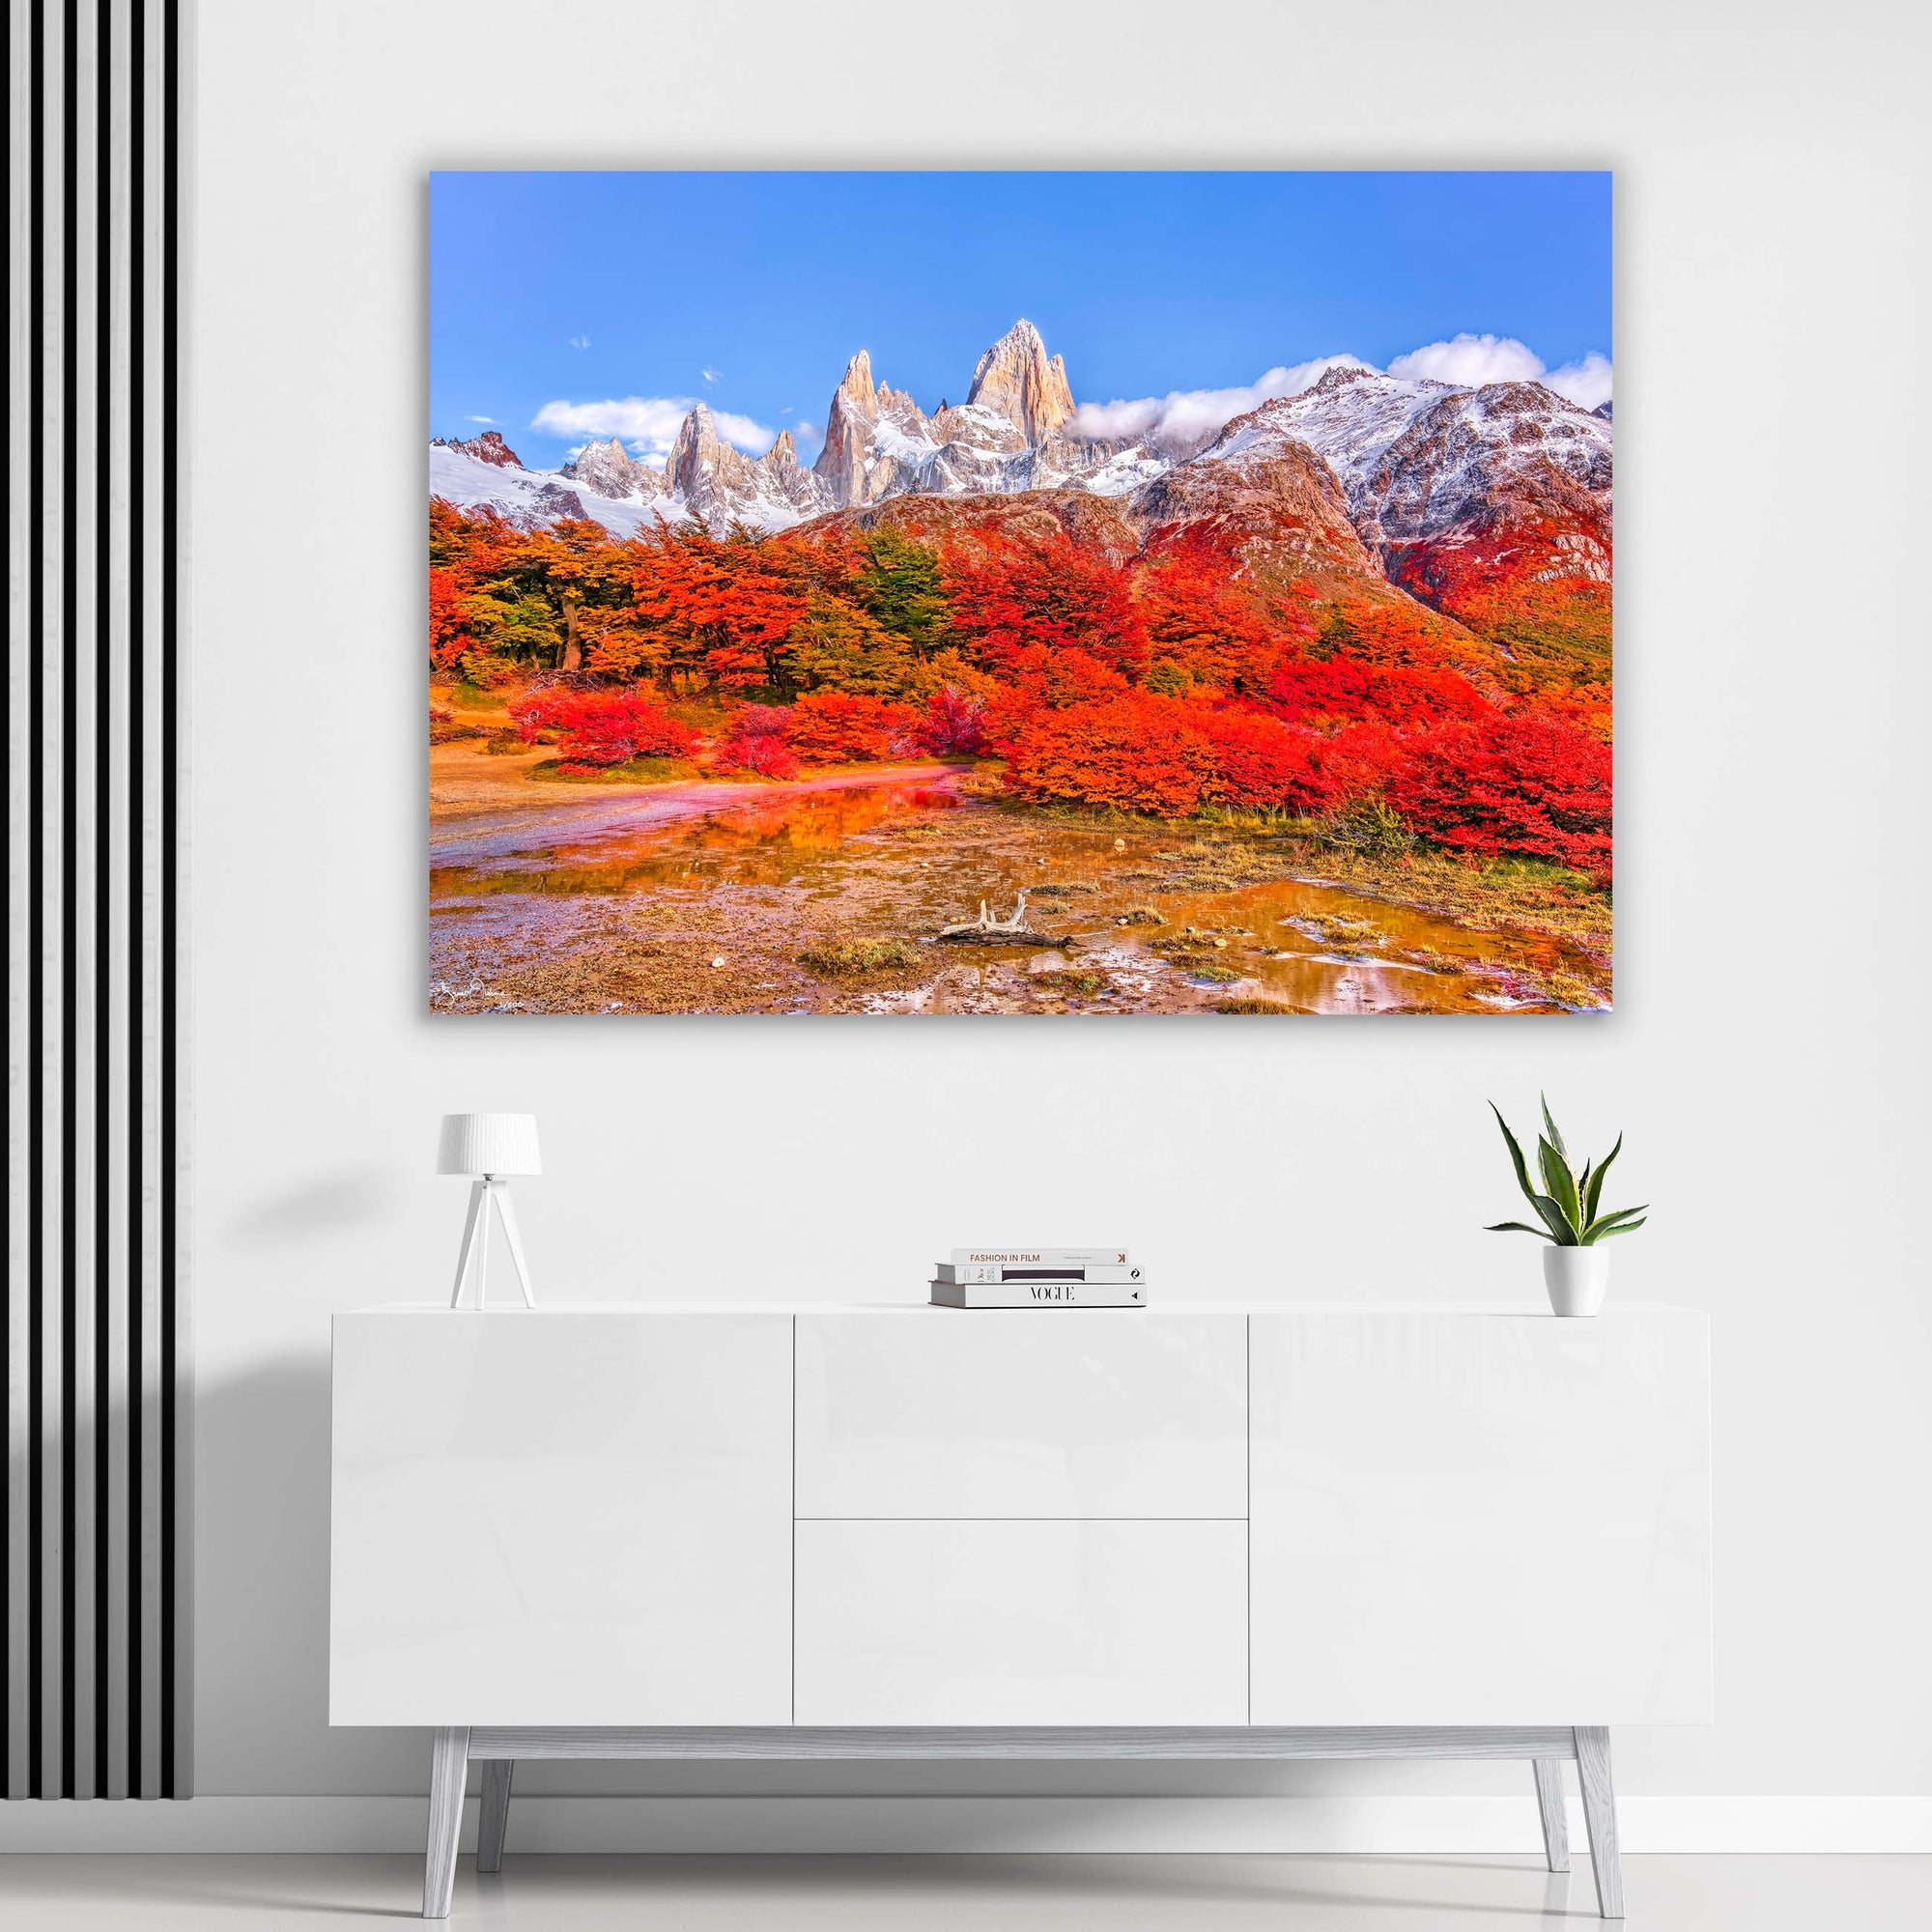 Landscape Mountain Peak Luxury Wall-Art Print Fall Colors Fine Art Patagonia Argentina